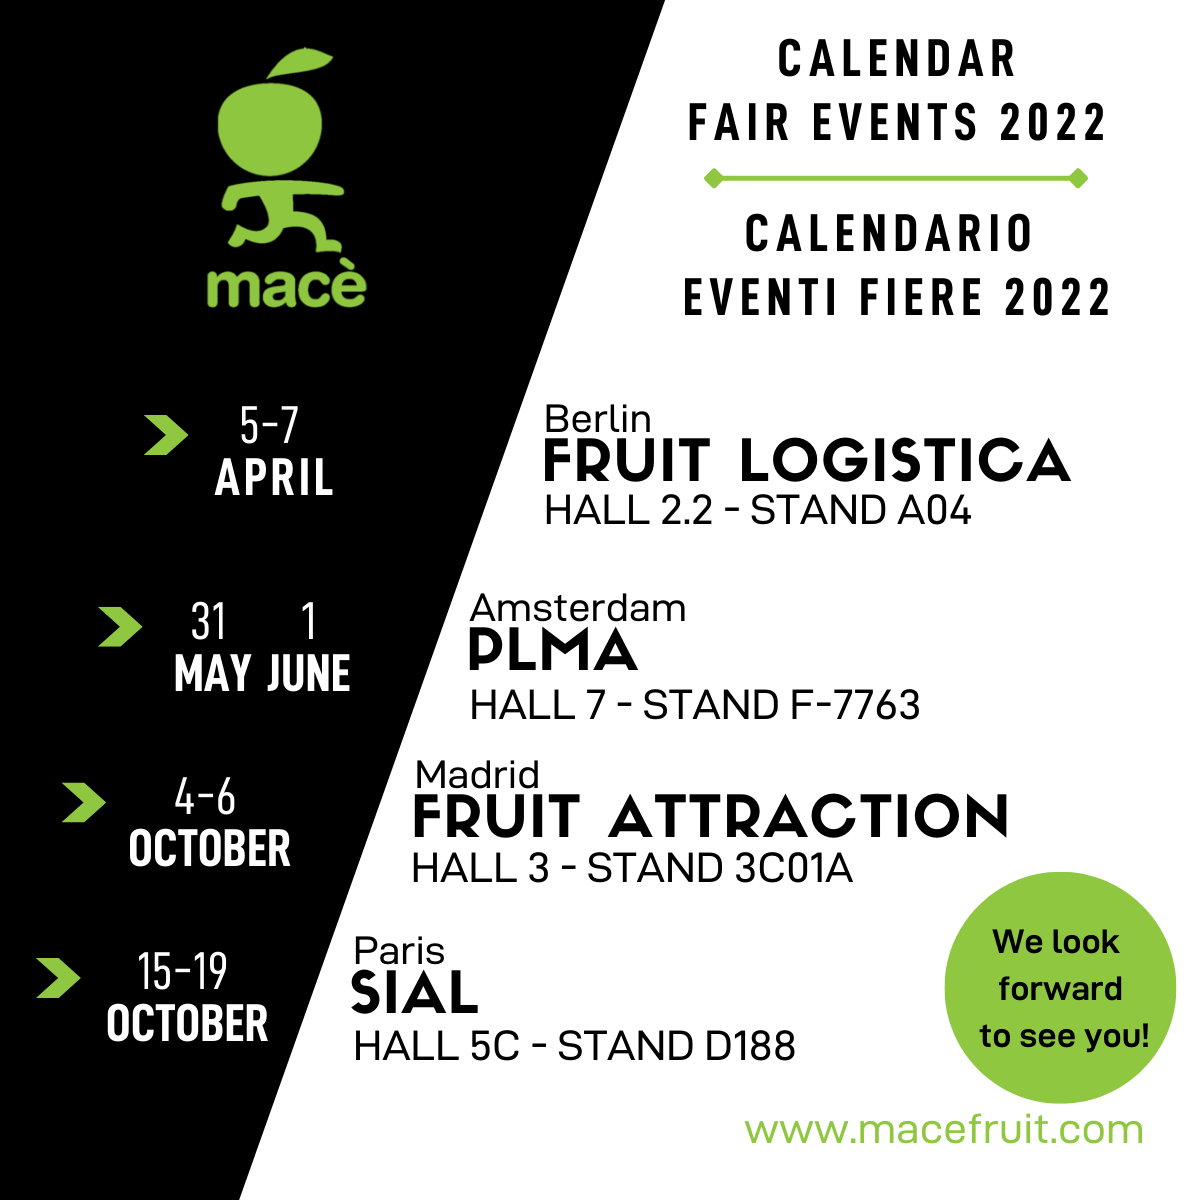 calendario fiere 2022 a cui Mac partecipa: fruit logistica 5-7 aprile,  PLMA 31 maggio 1 giugno, fruit attraction 4-6 ottobre, SIAL 15-19 ottobre